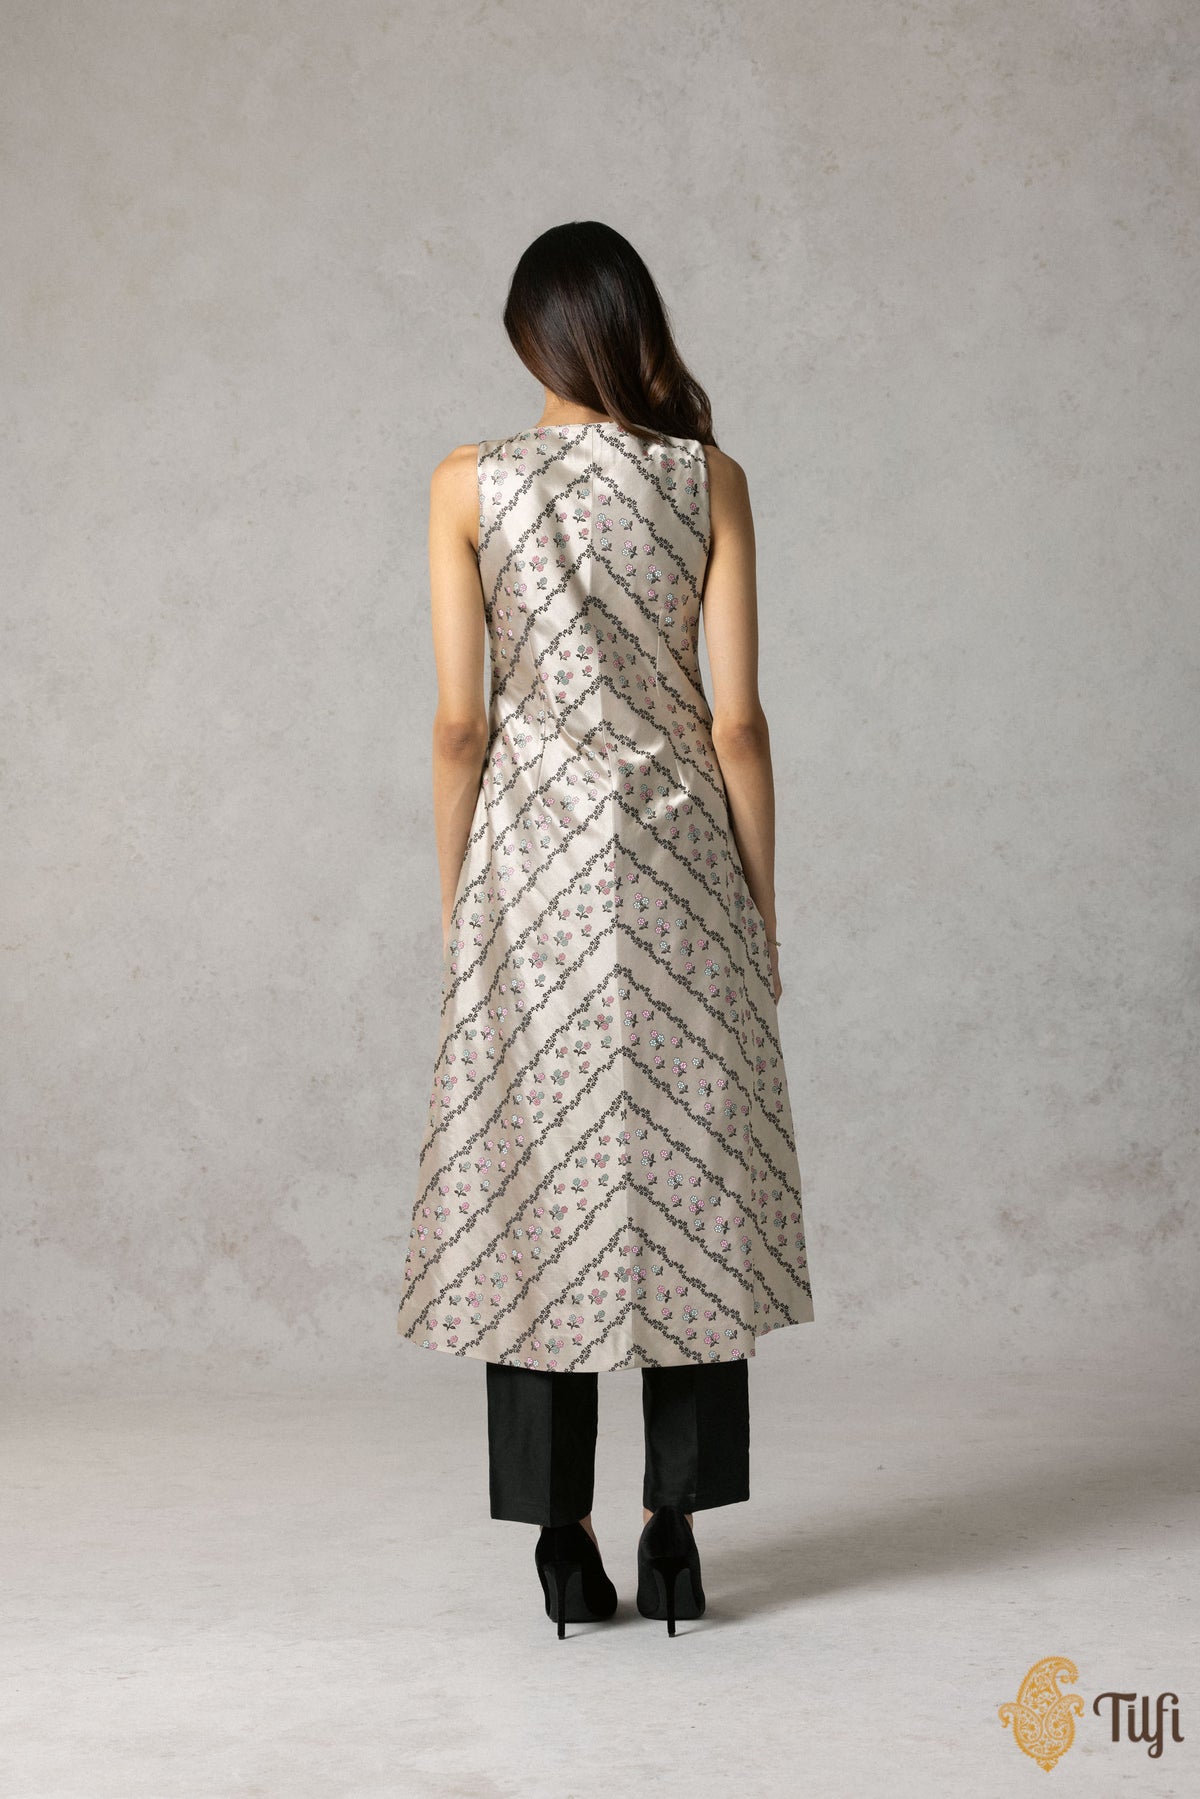 Off-White Pure Satin Silk Banarasi Handloom Suit Set